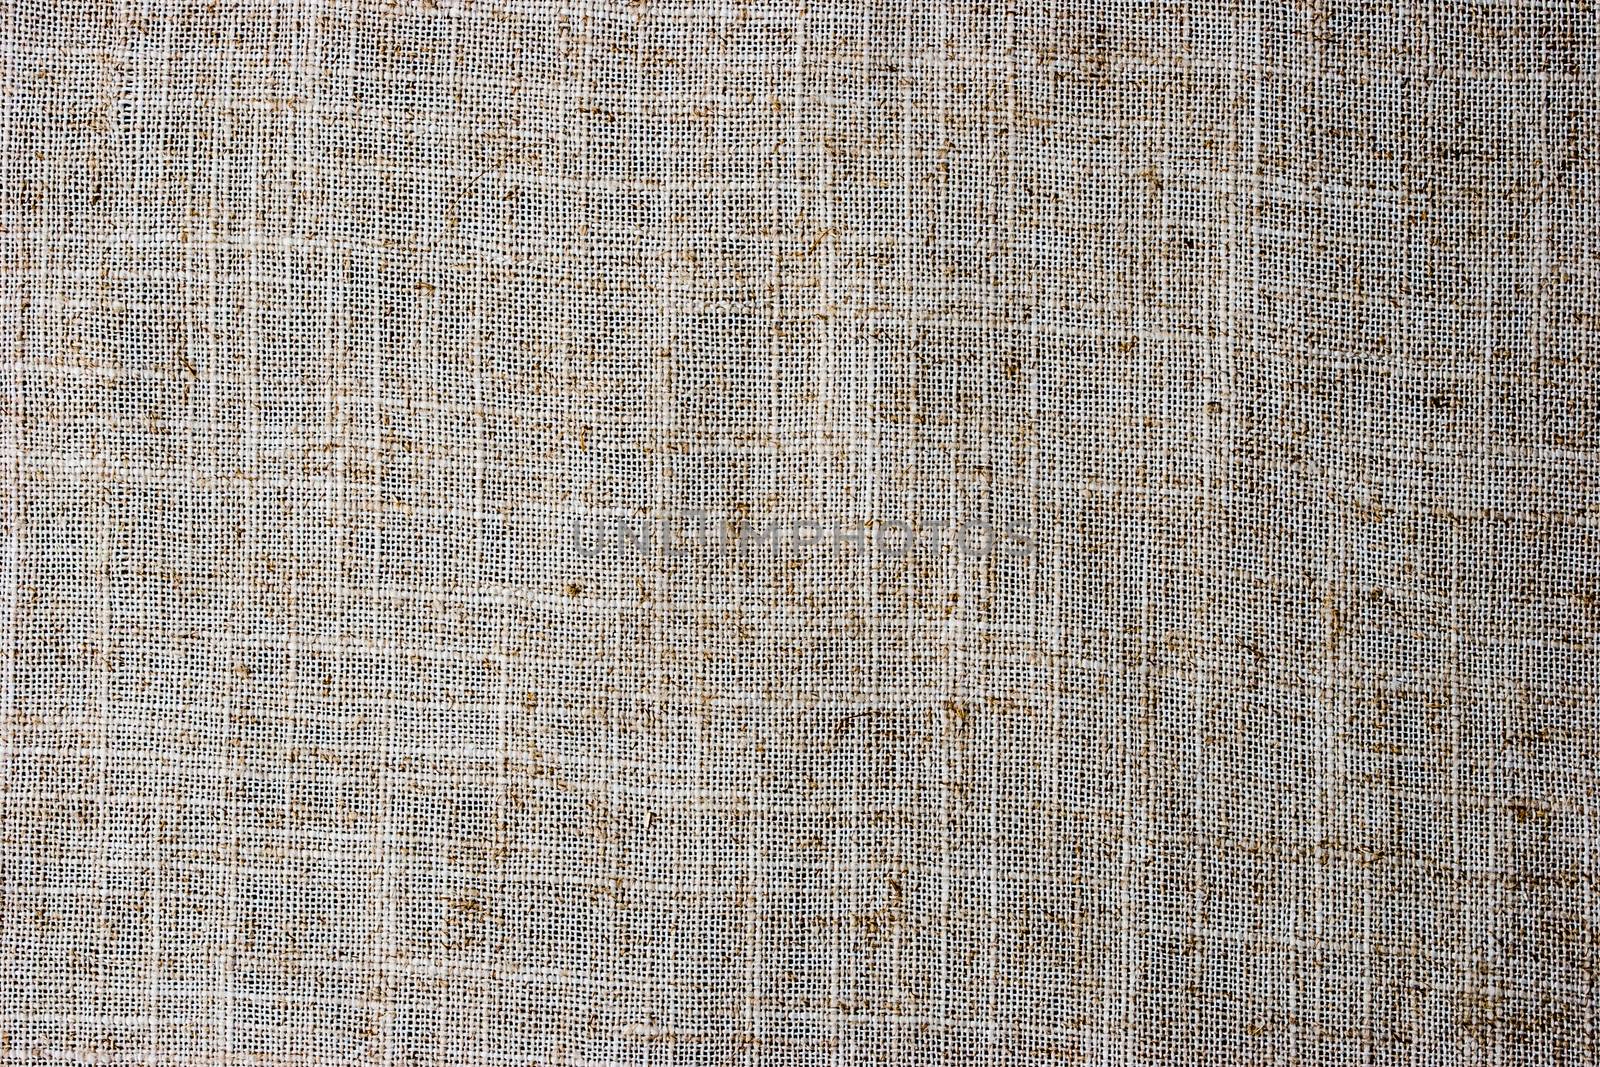 Natural flax napkin background